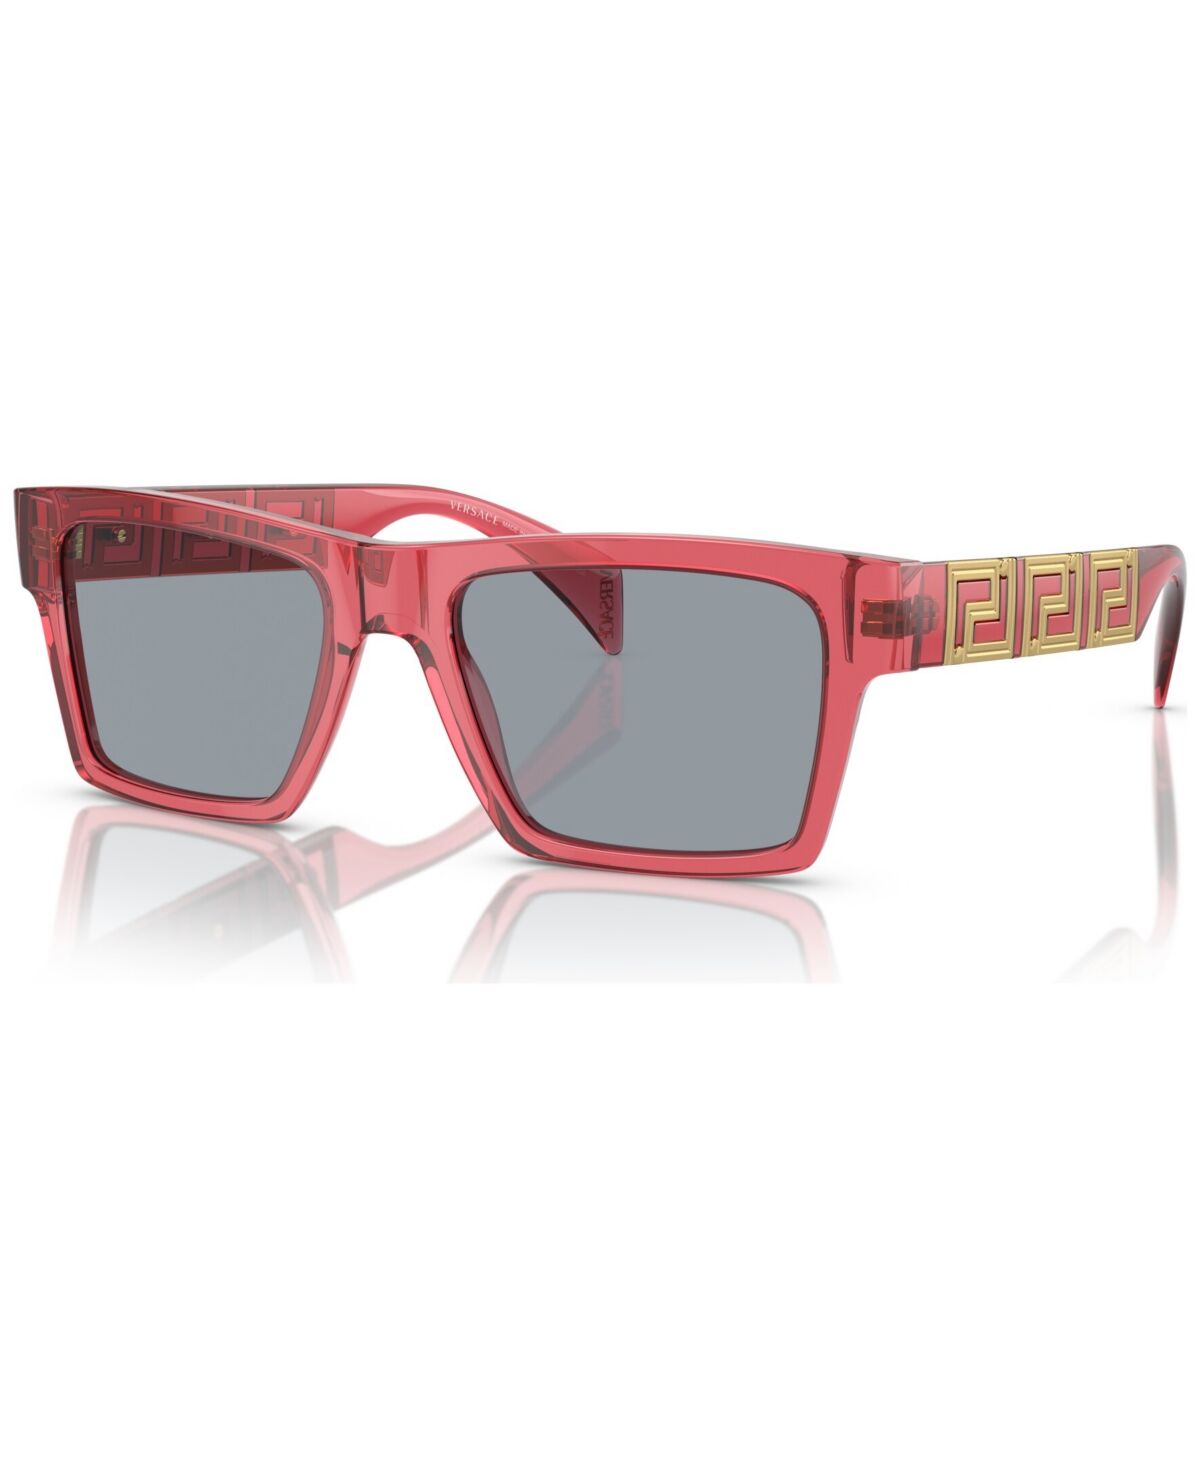 Versace Men's Sunglasses, VE4445 - Transparent Red